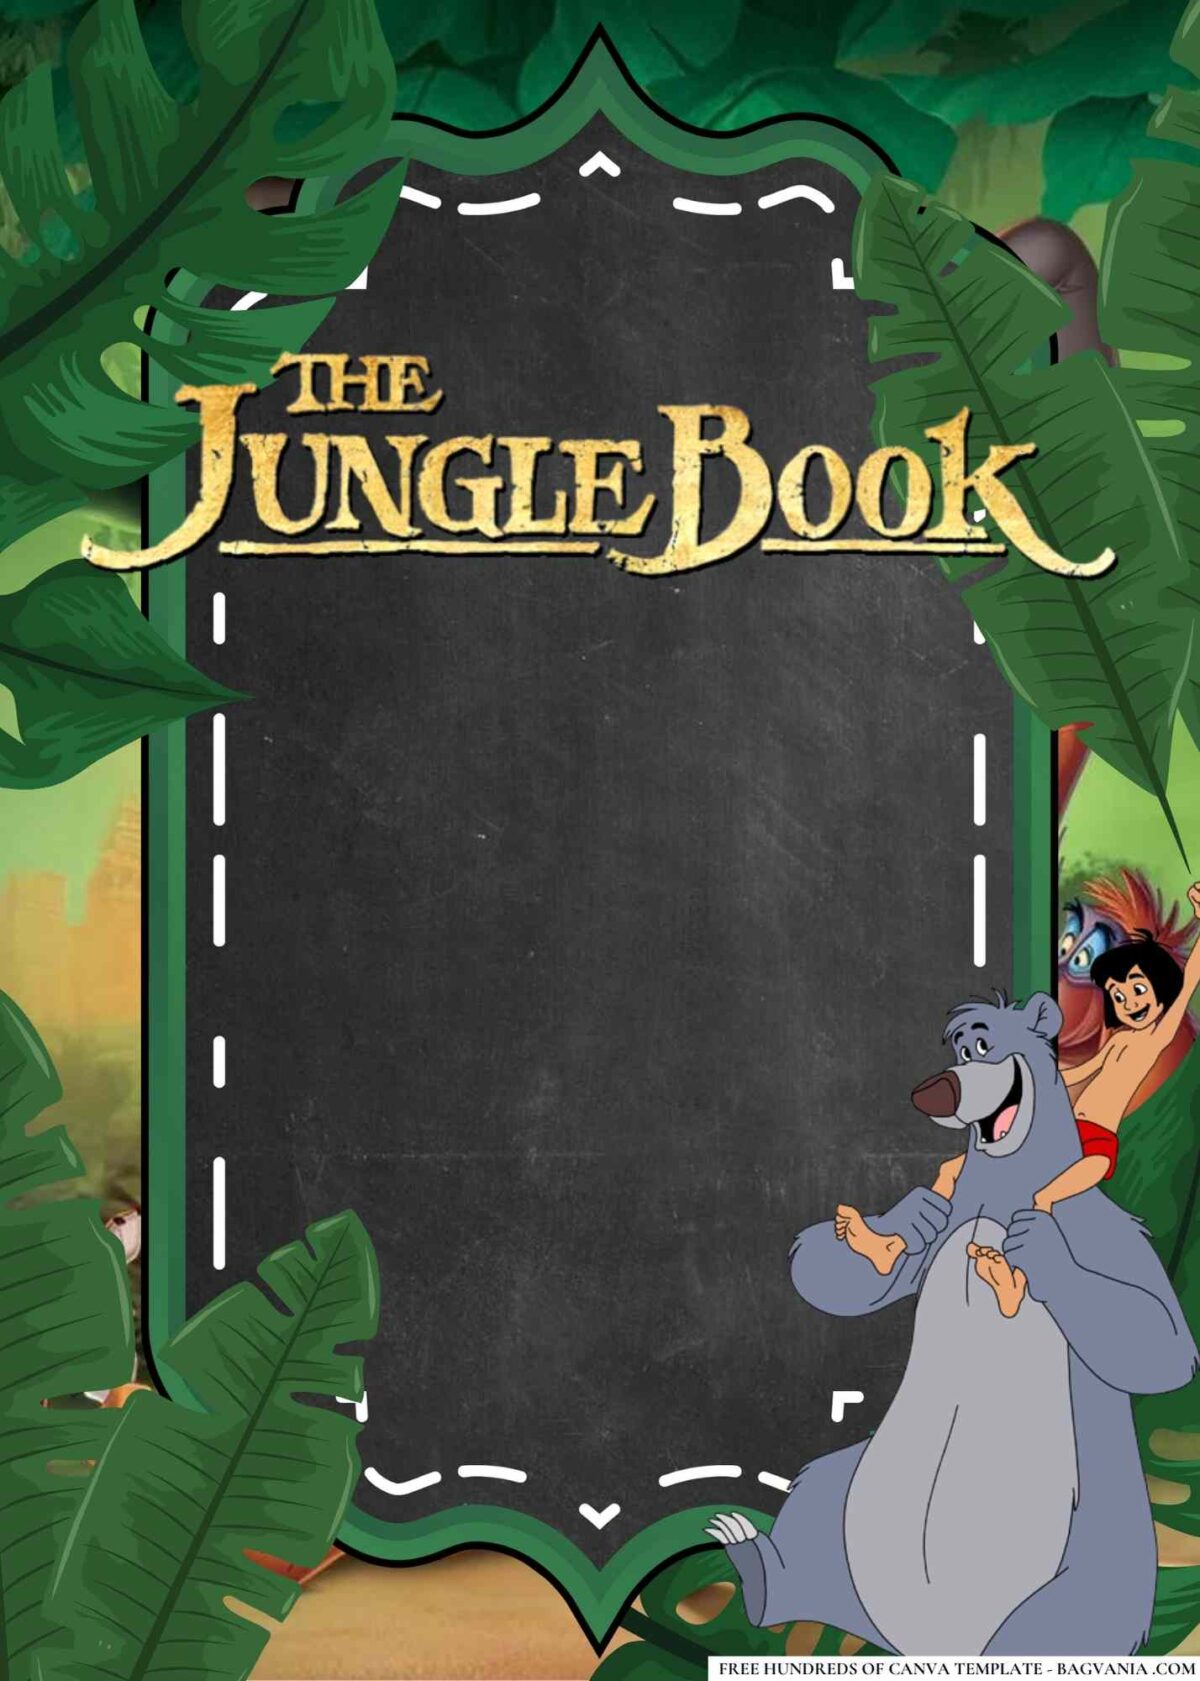 FREE Editable The Jungle Book Birthday Invitations